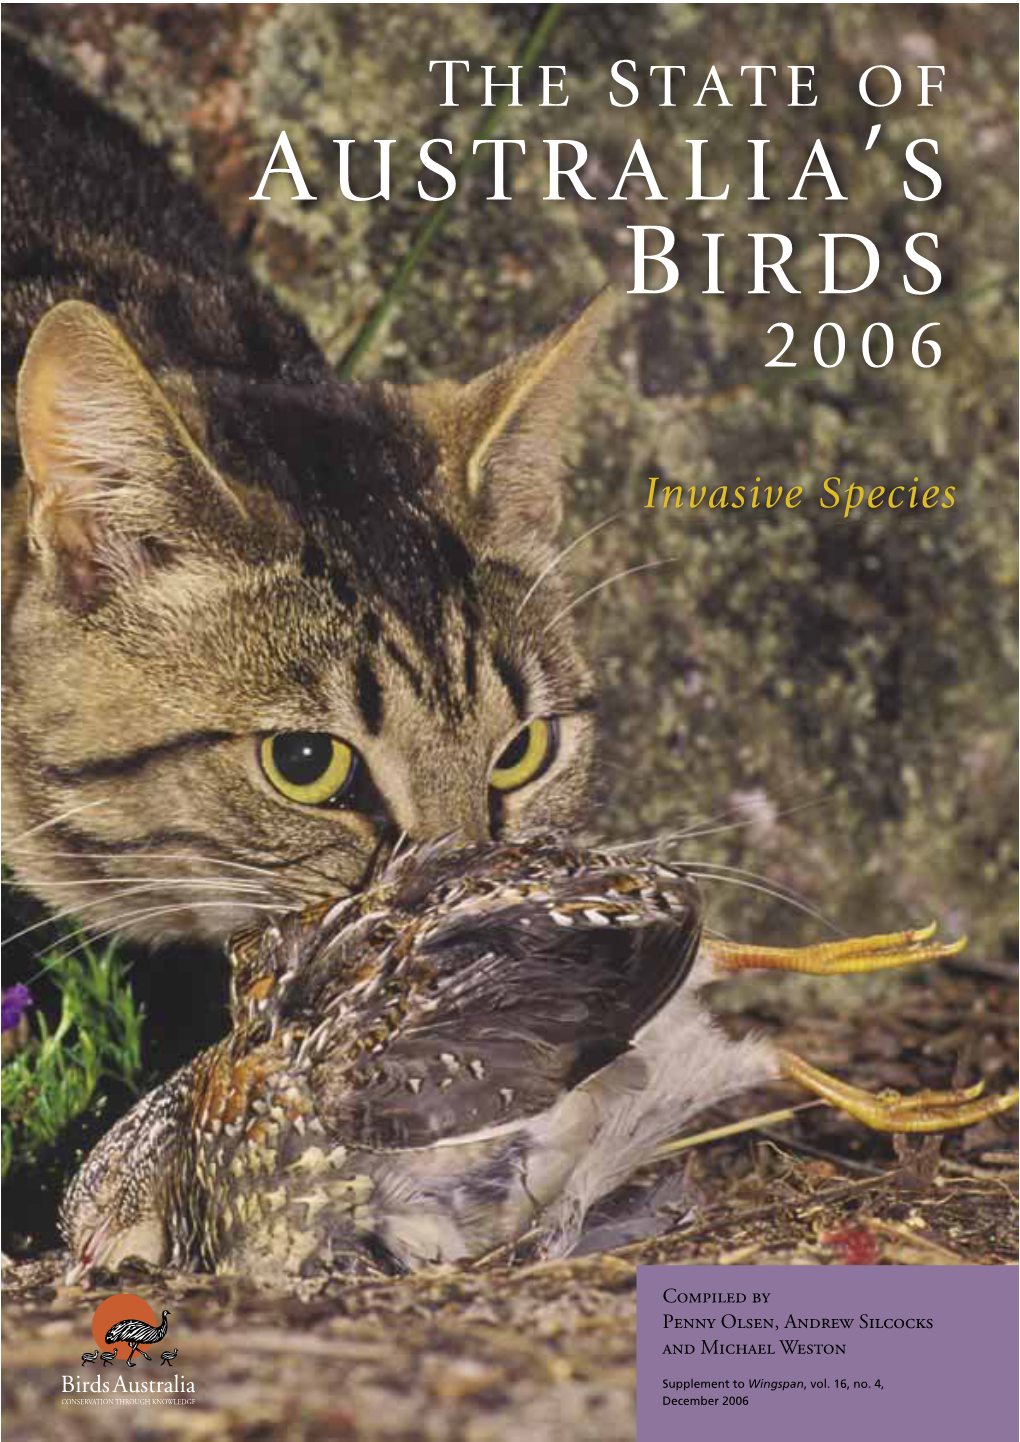 The State of Australia's Birds 2006